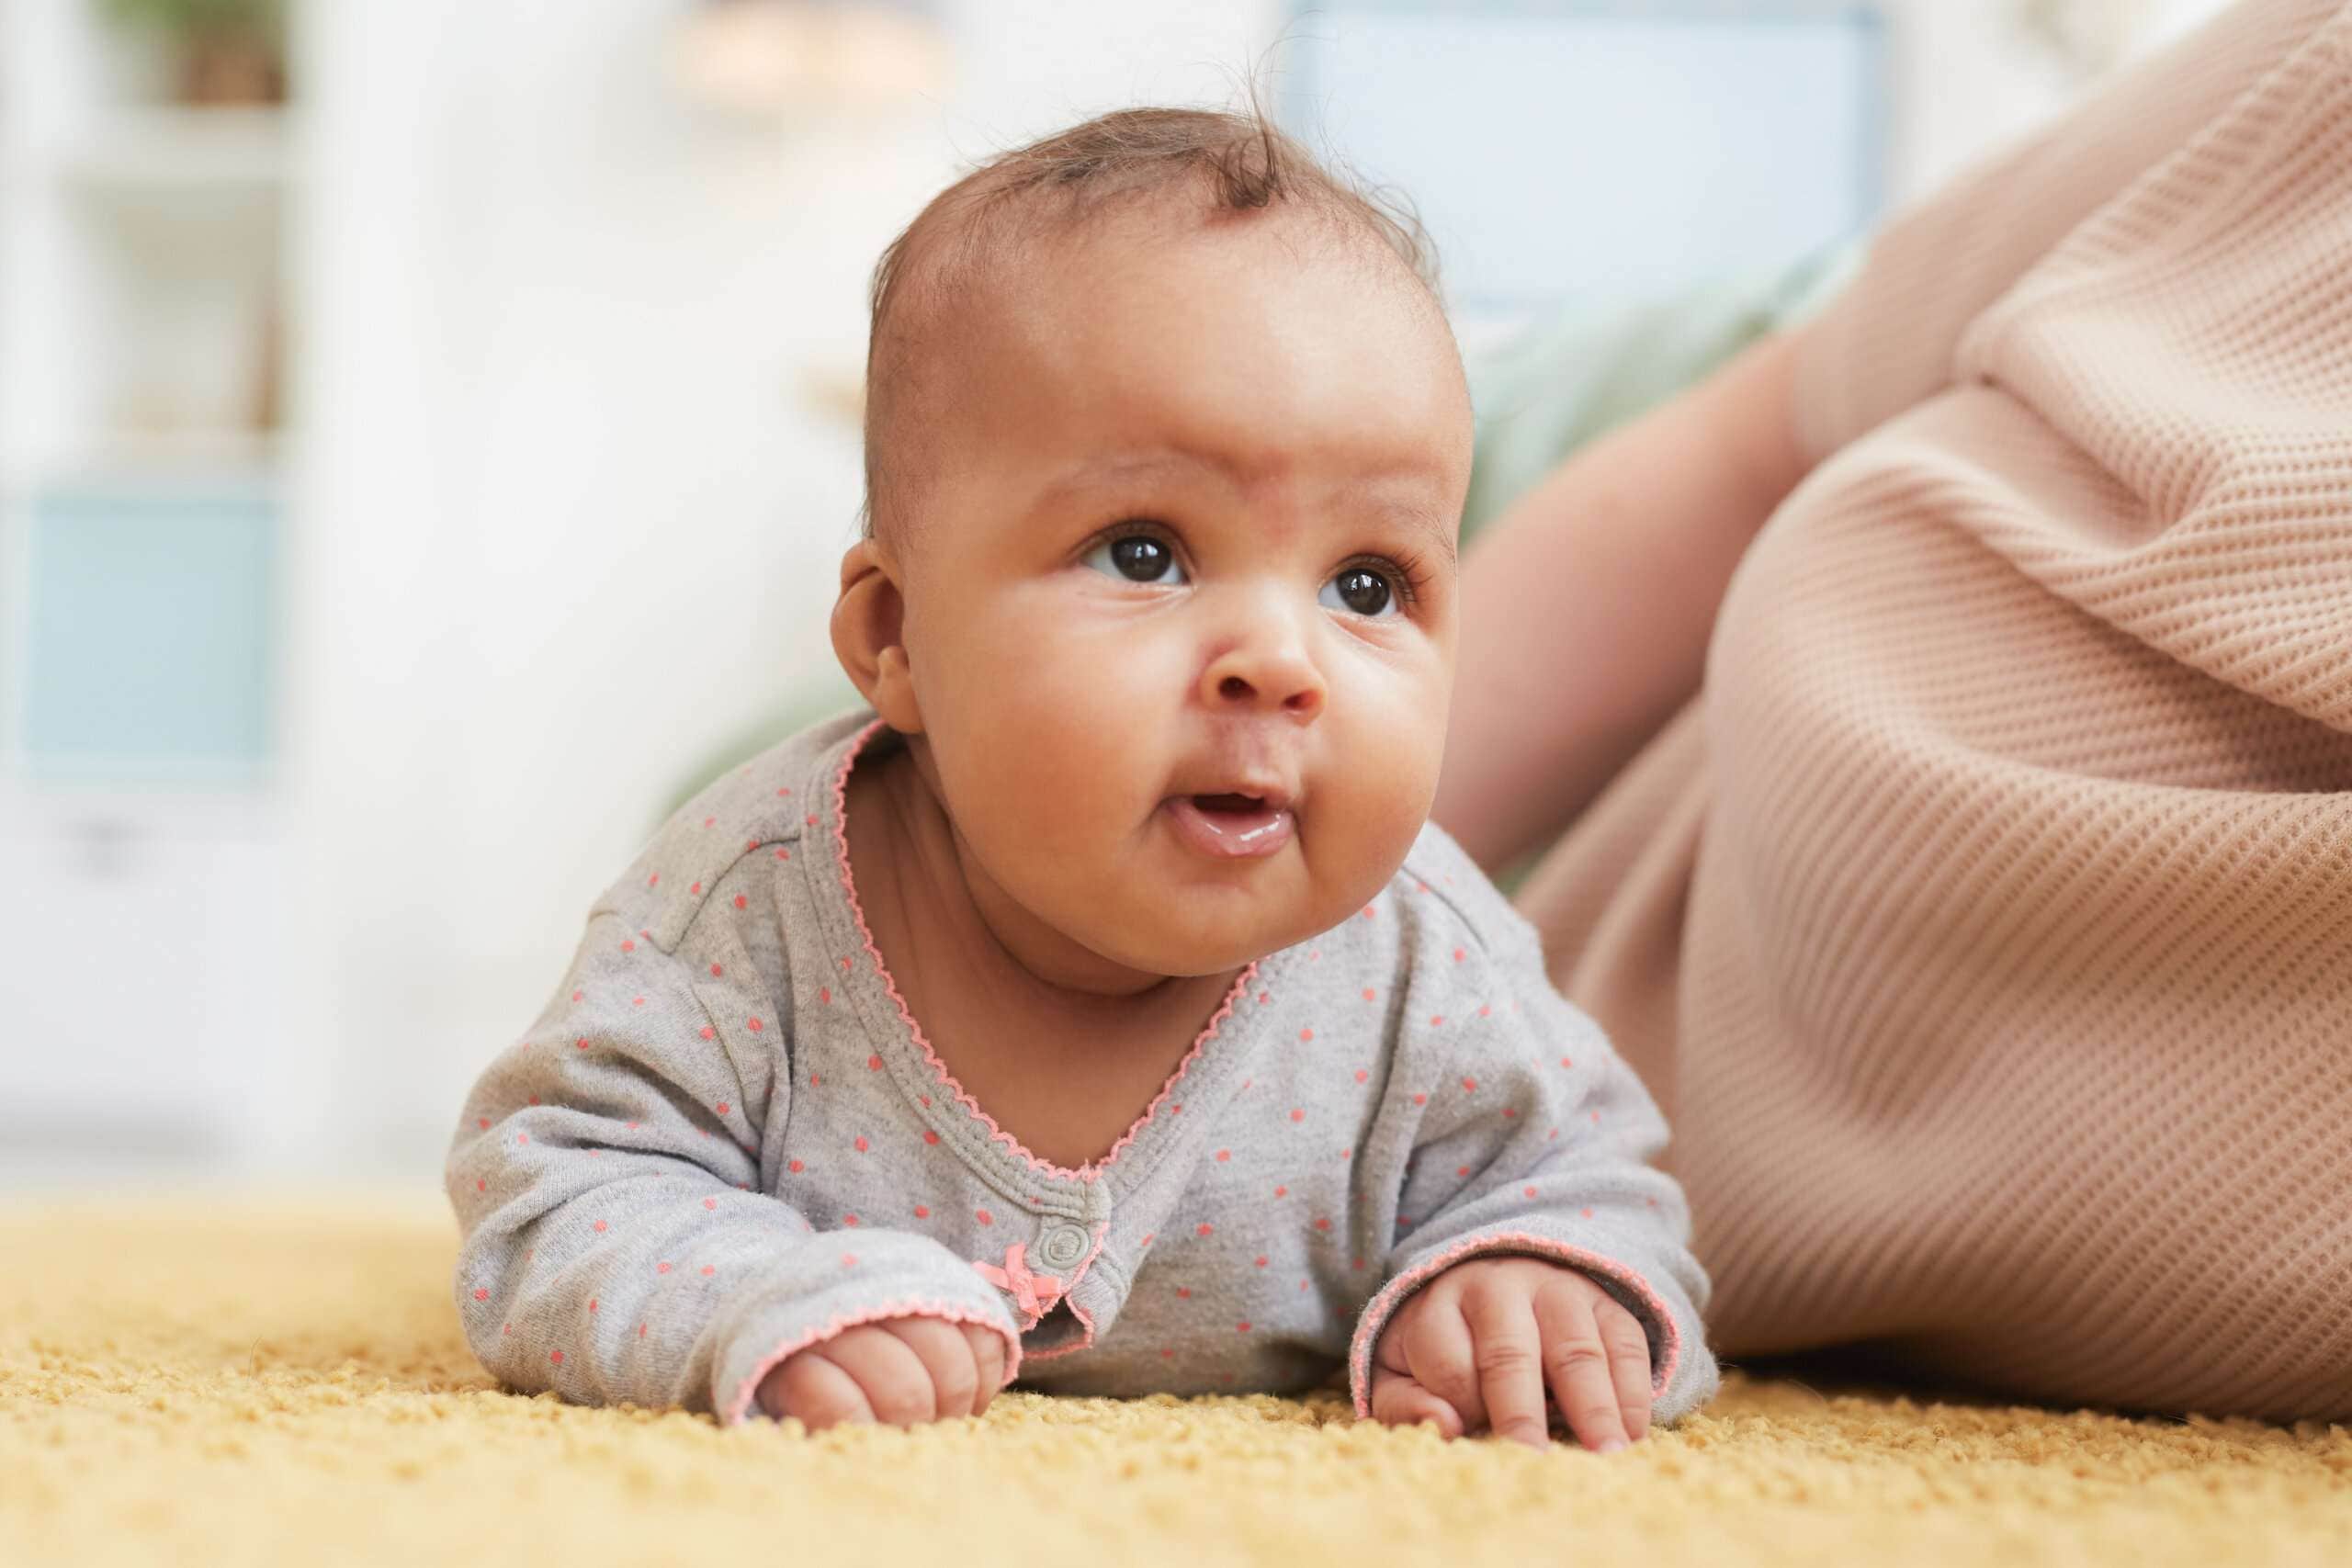 Infant strengthening neck muscles